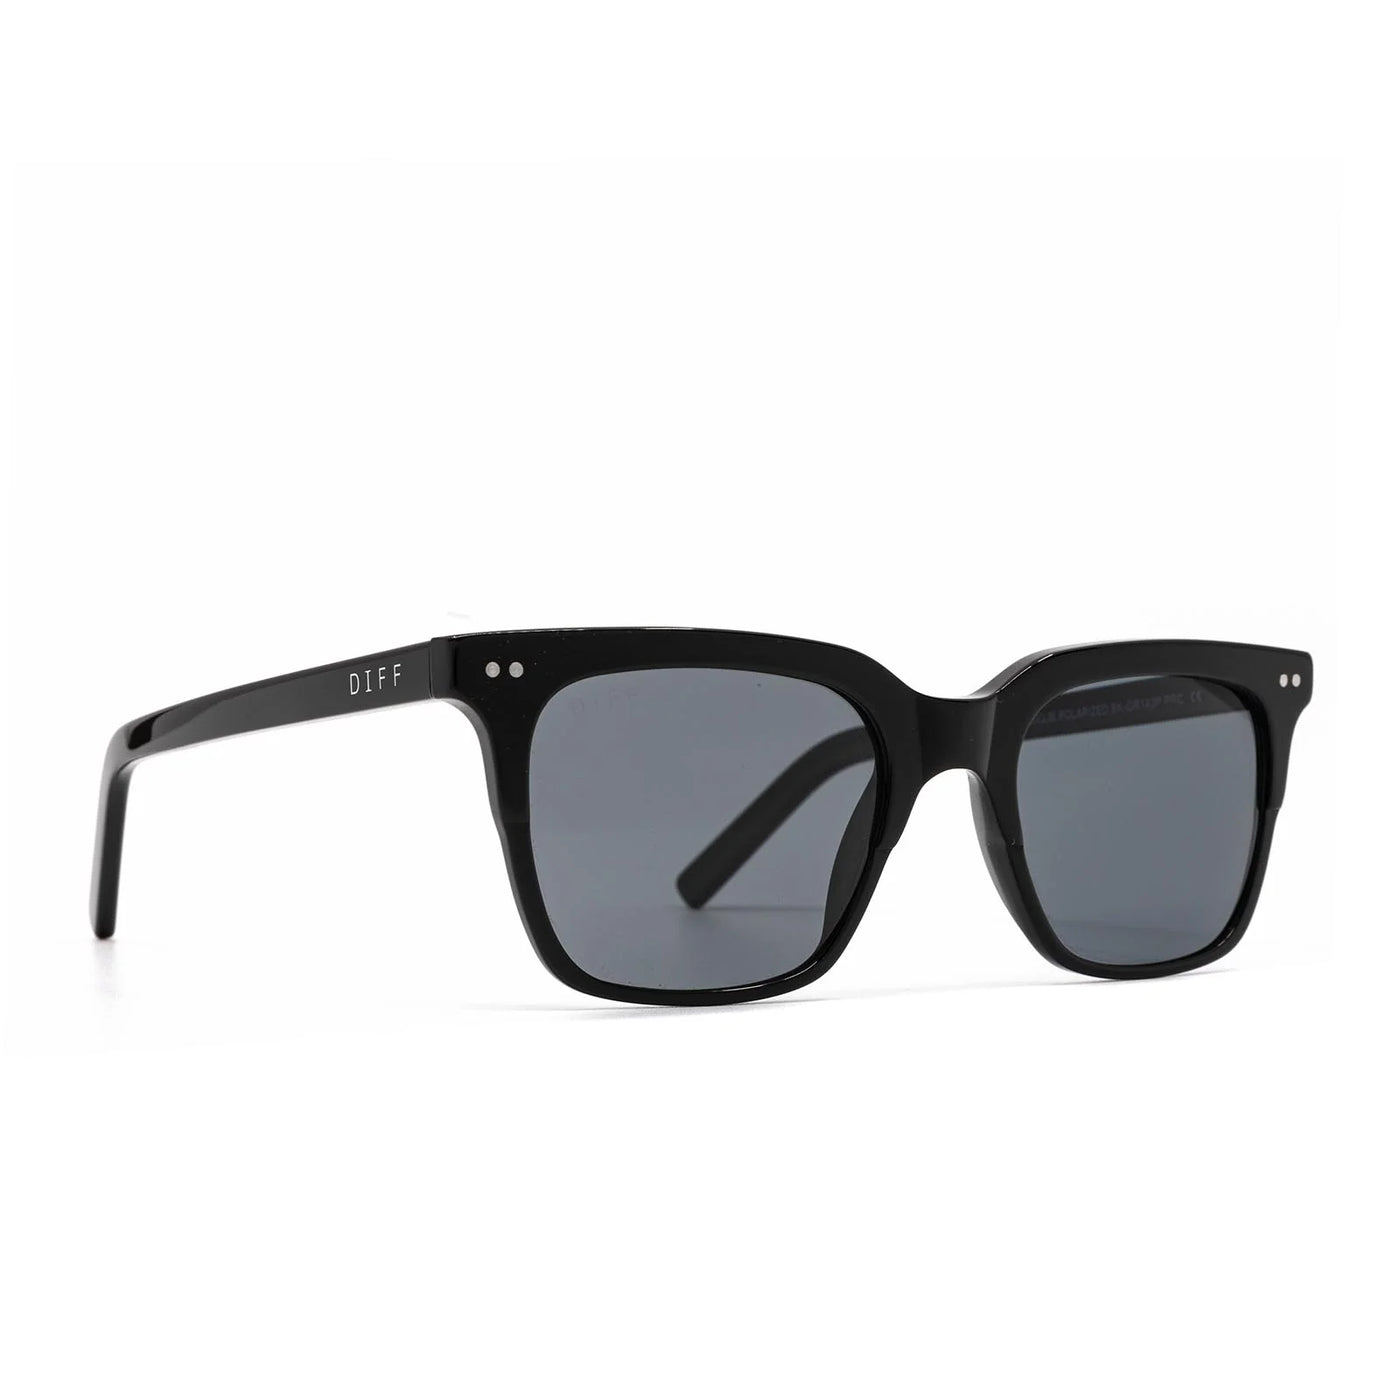 DIFF Billie Sunglasses | Black + Grey